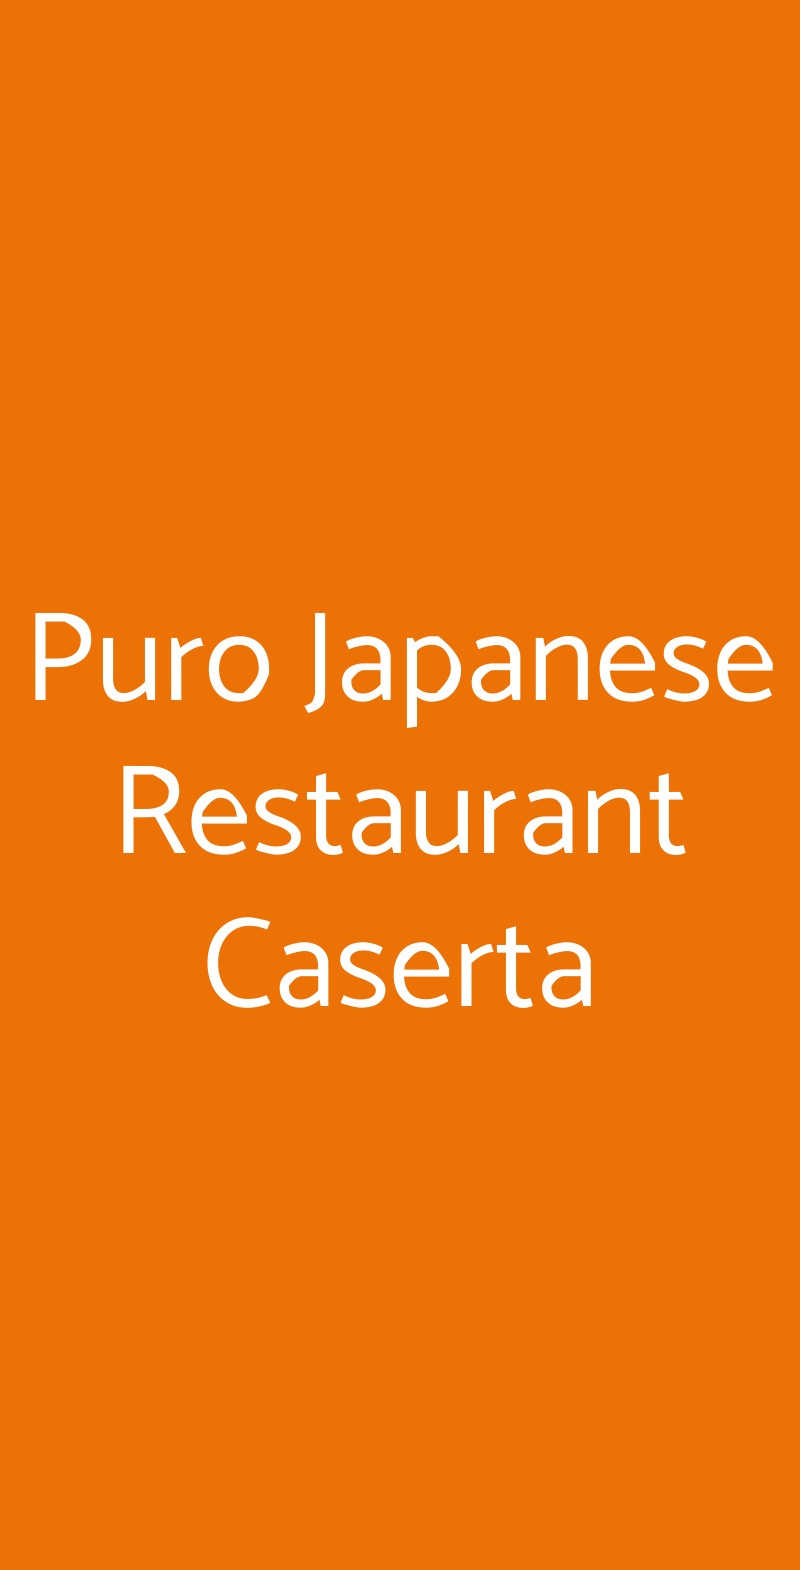 Puro Japanese Restaurant  Caserta menù 1 pagina